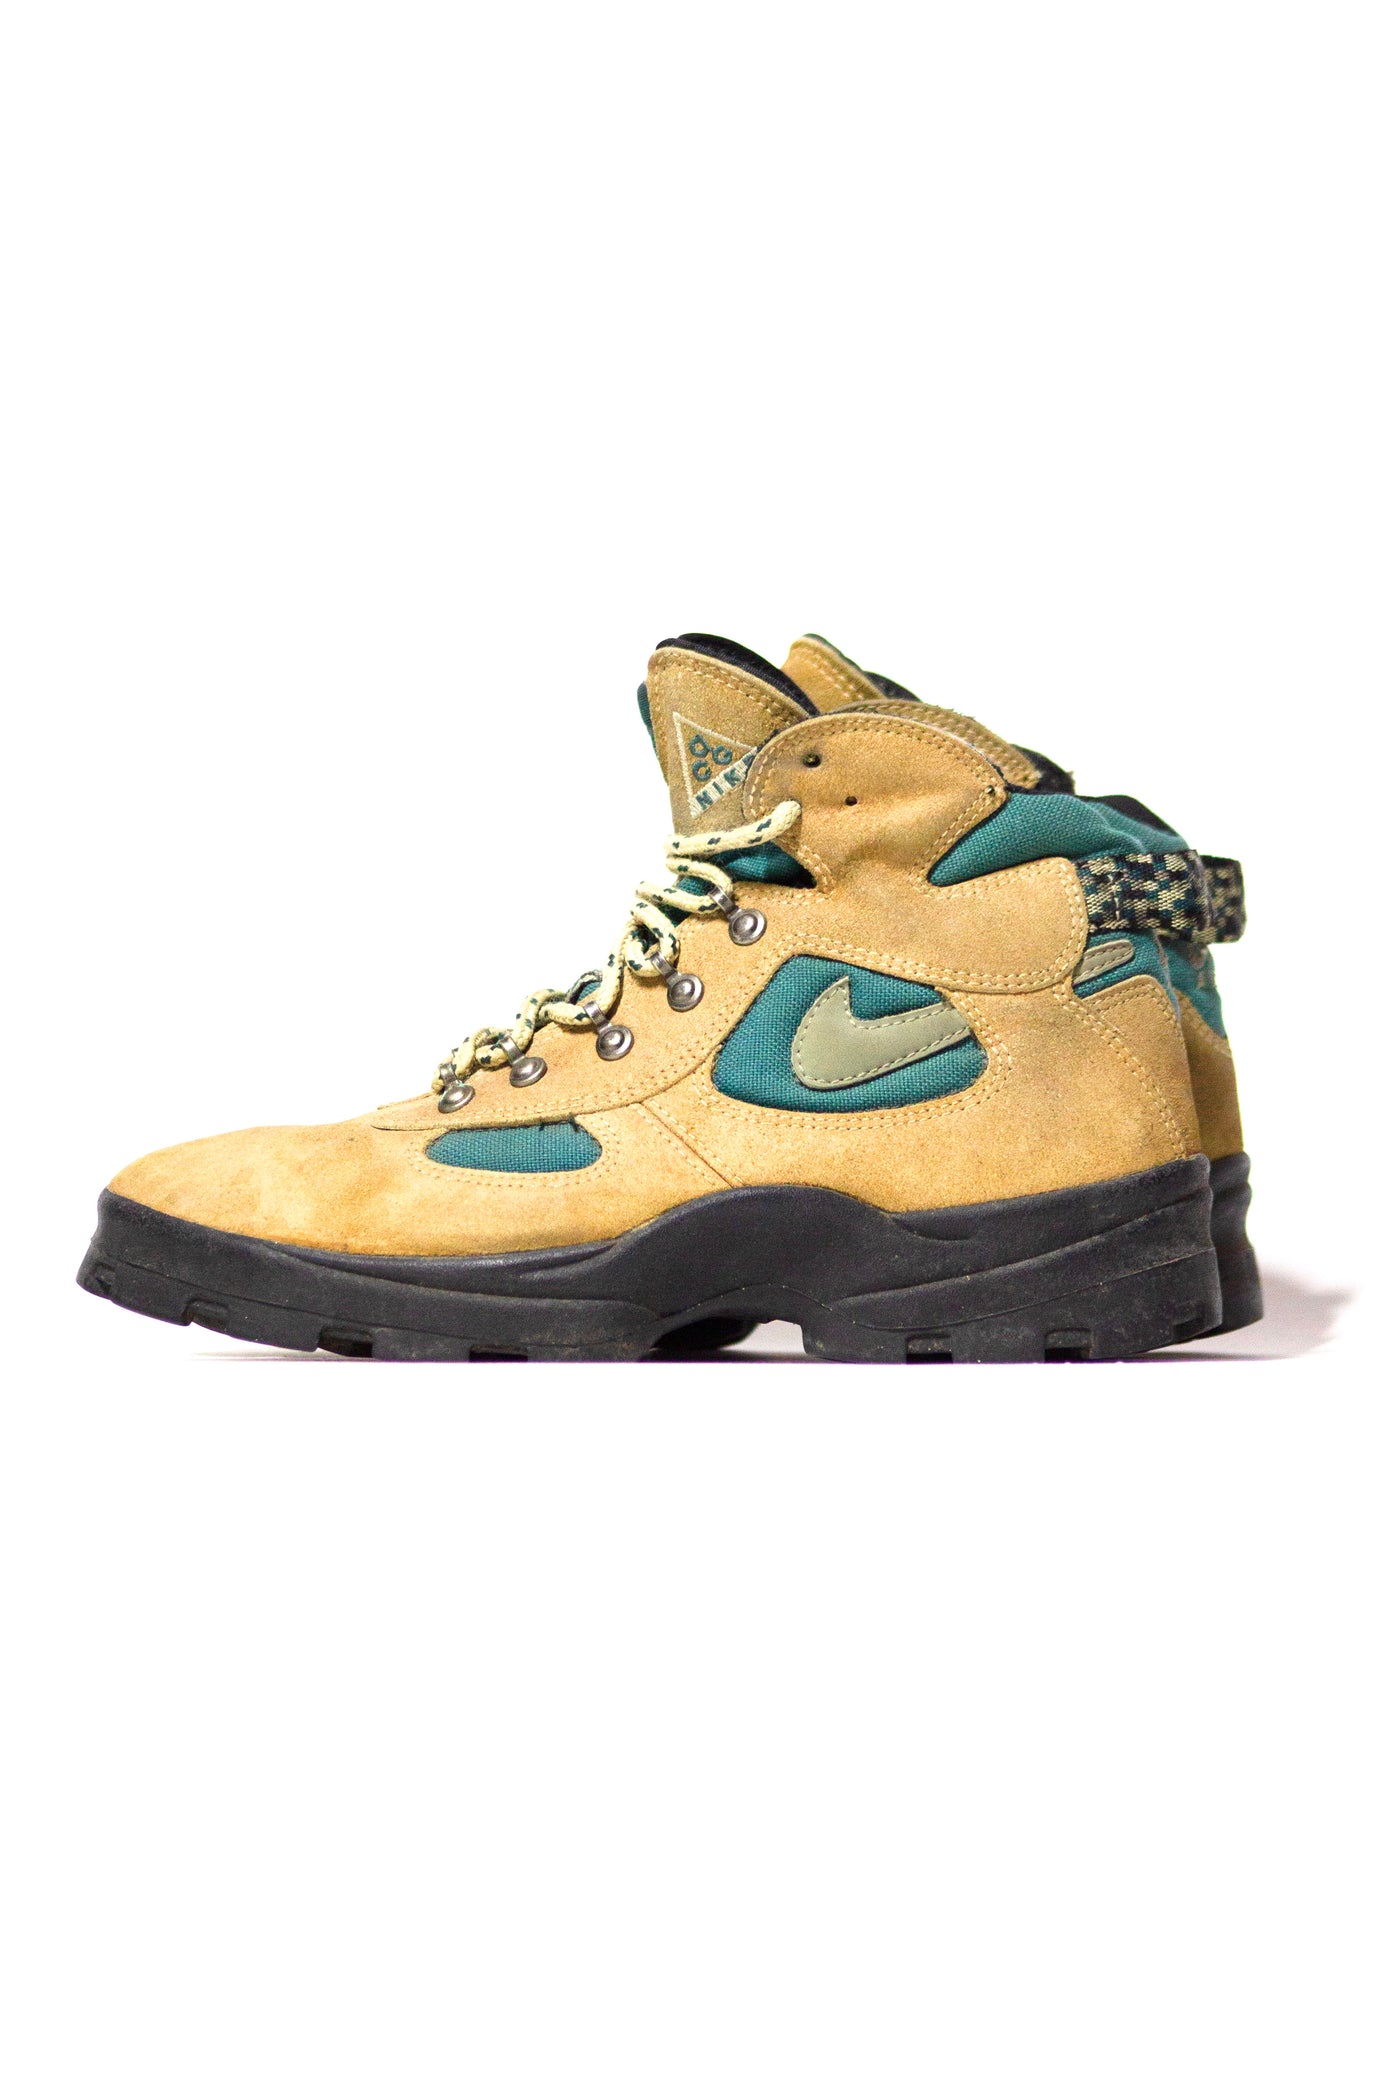 Vintage 1995 Nike ACG Hiking Boots - Caldera